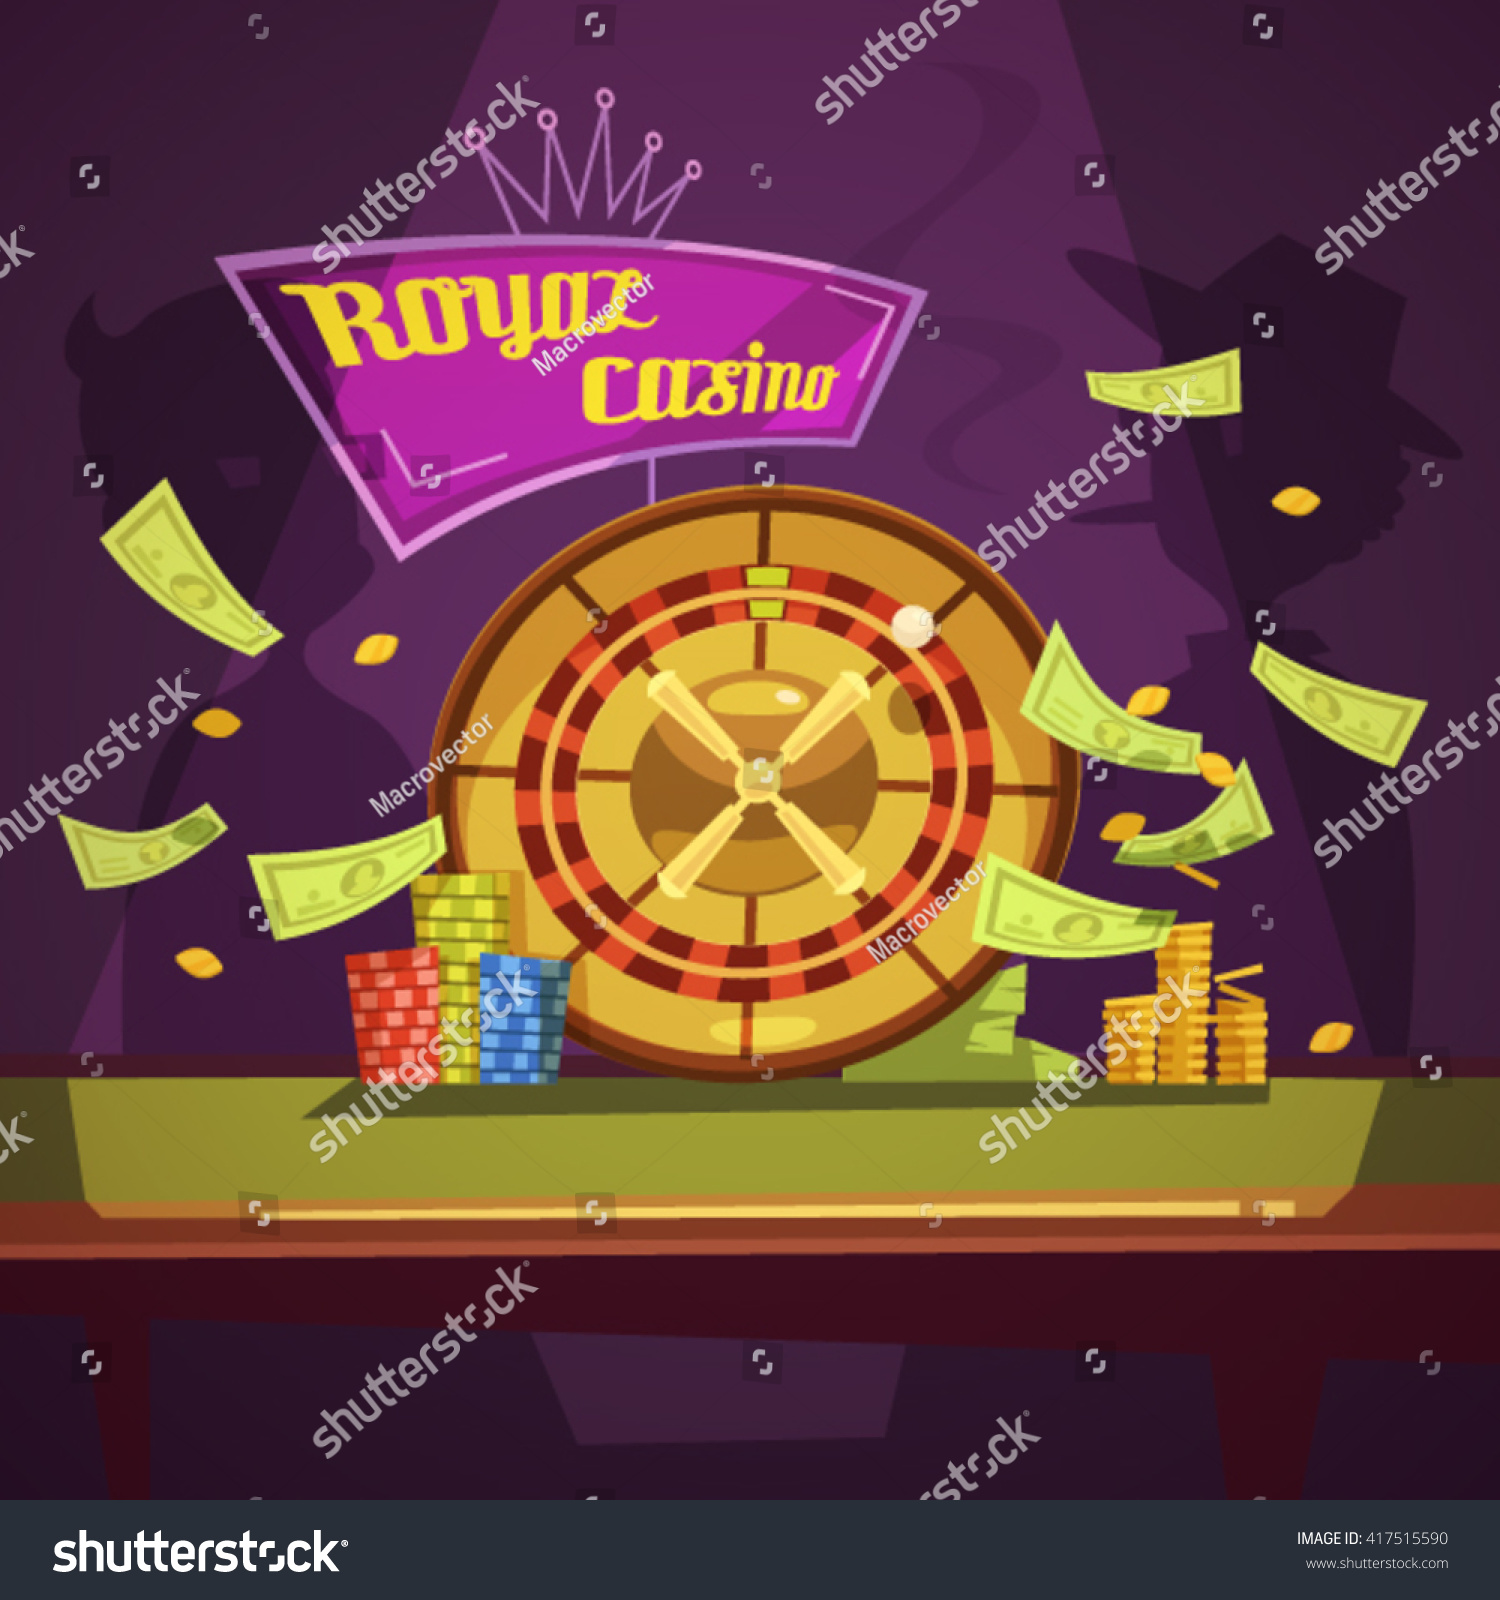 Royal casino roulette